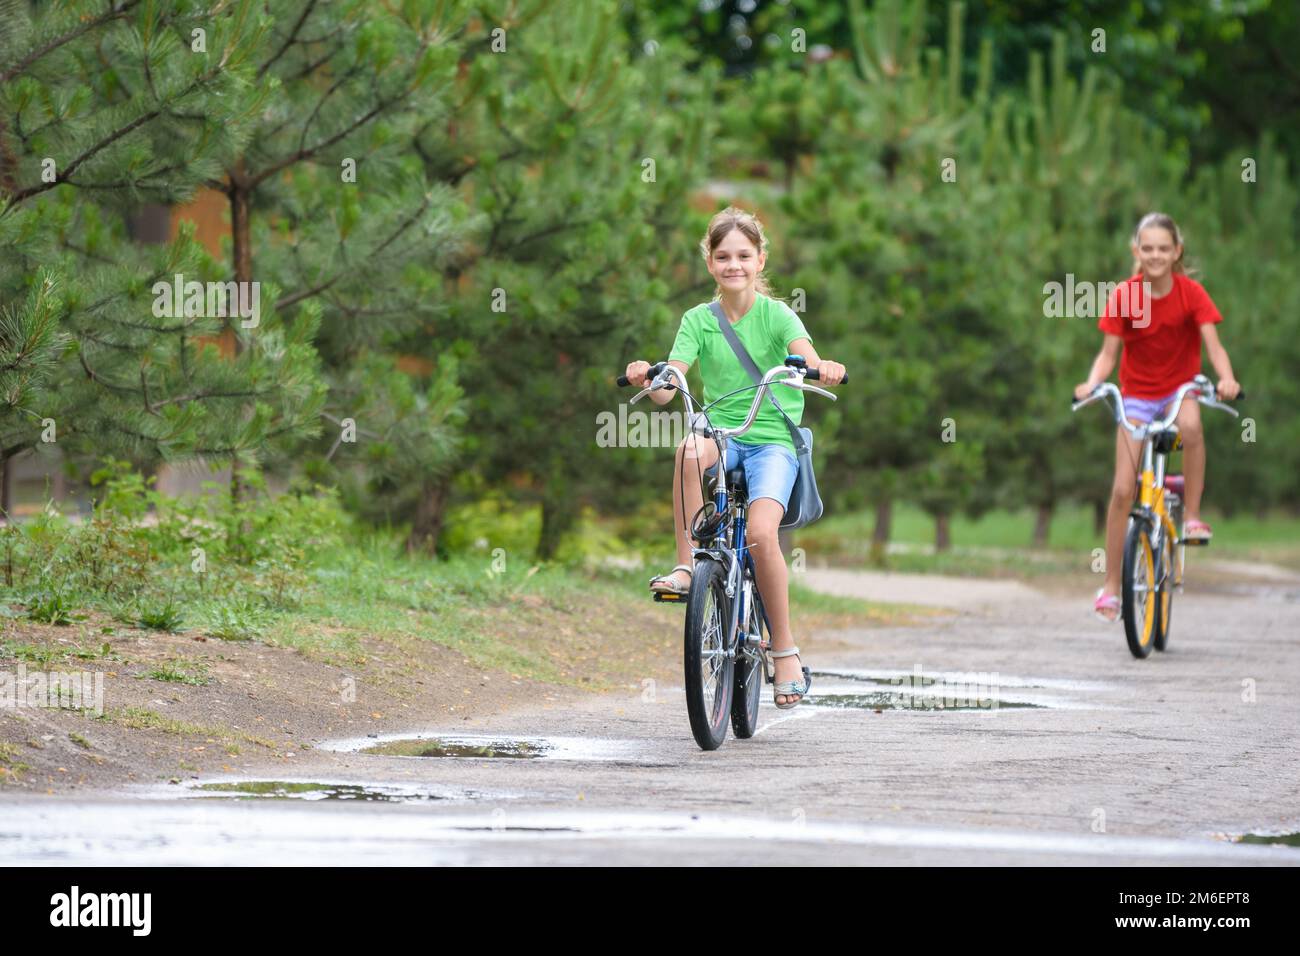 Two girls ride a bike on a rainy warm day Stock Photo